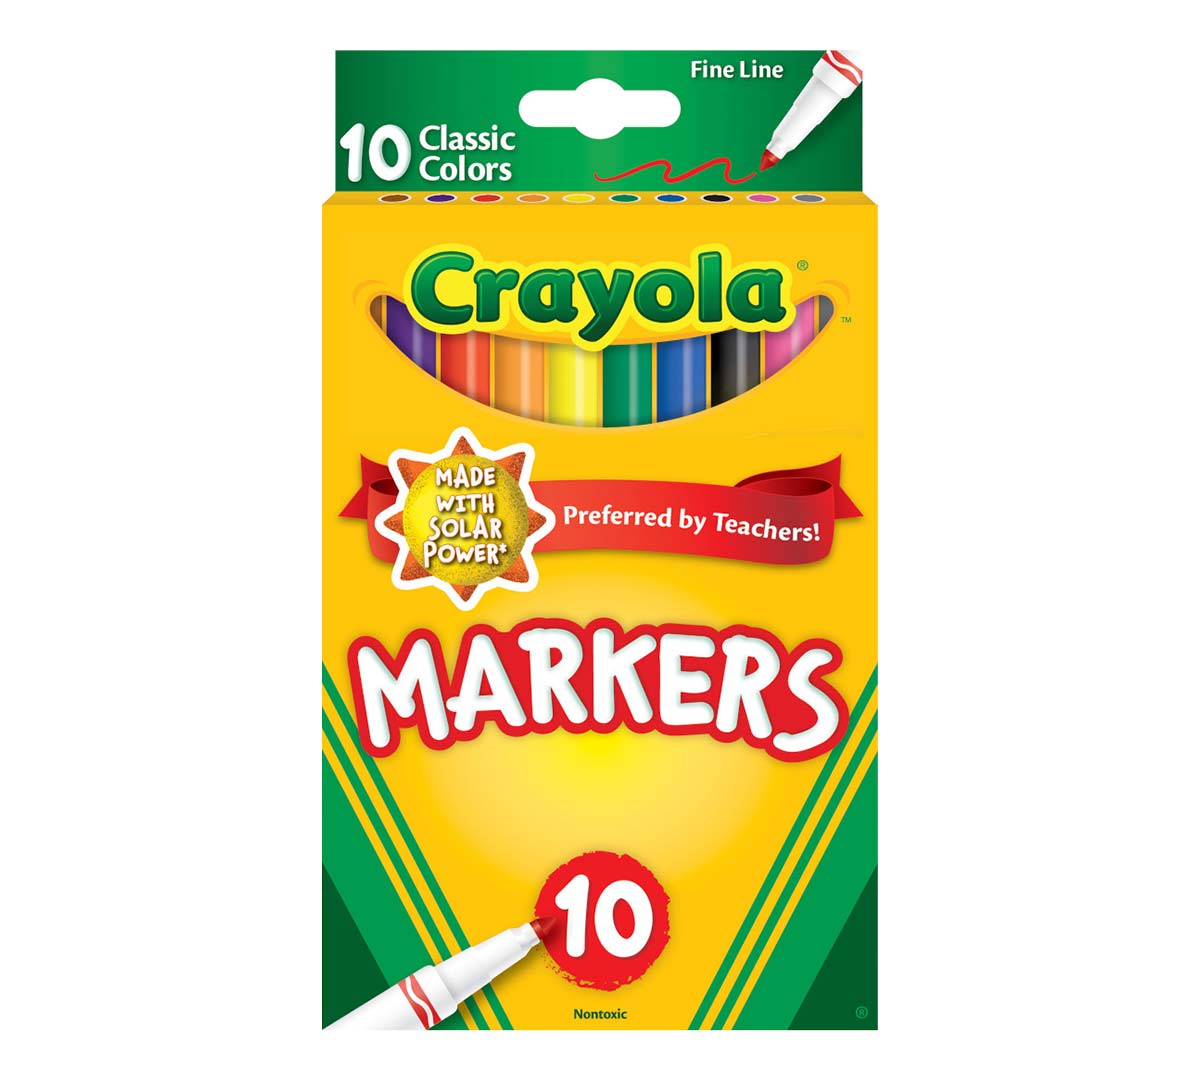 https://shop.crayola.com/on/demandware.static/-/Sites-crayola-storefront/default/dw2c265d4e/images/58-7726_Eco_10ct_Markers-FIne-Line_PDP_MAIN.jpg